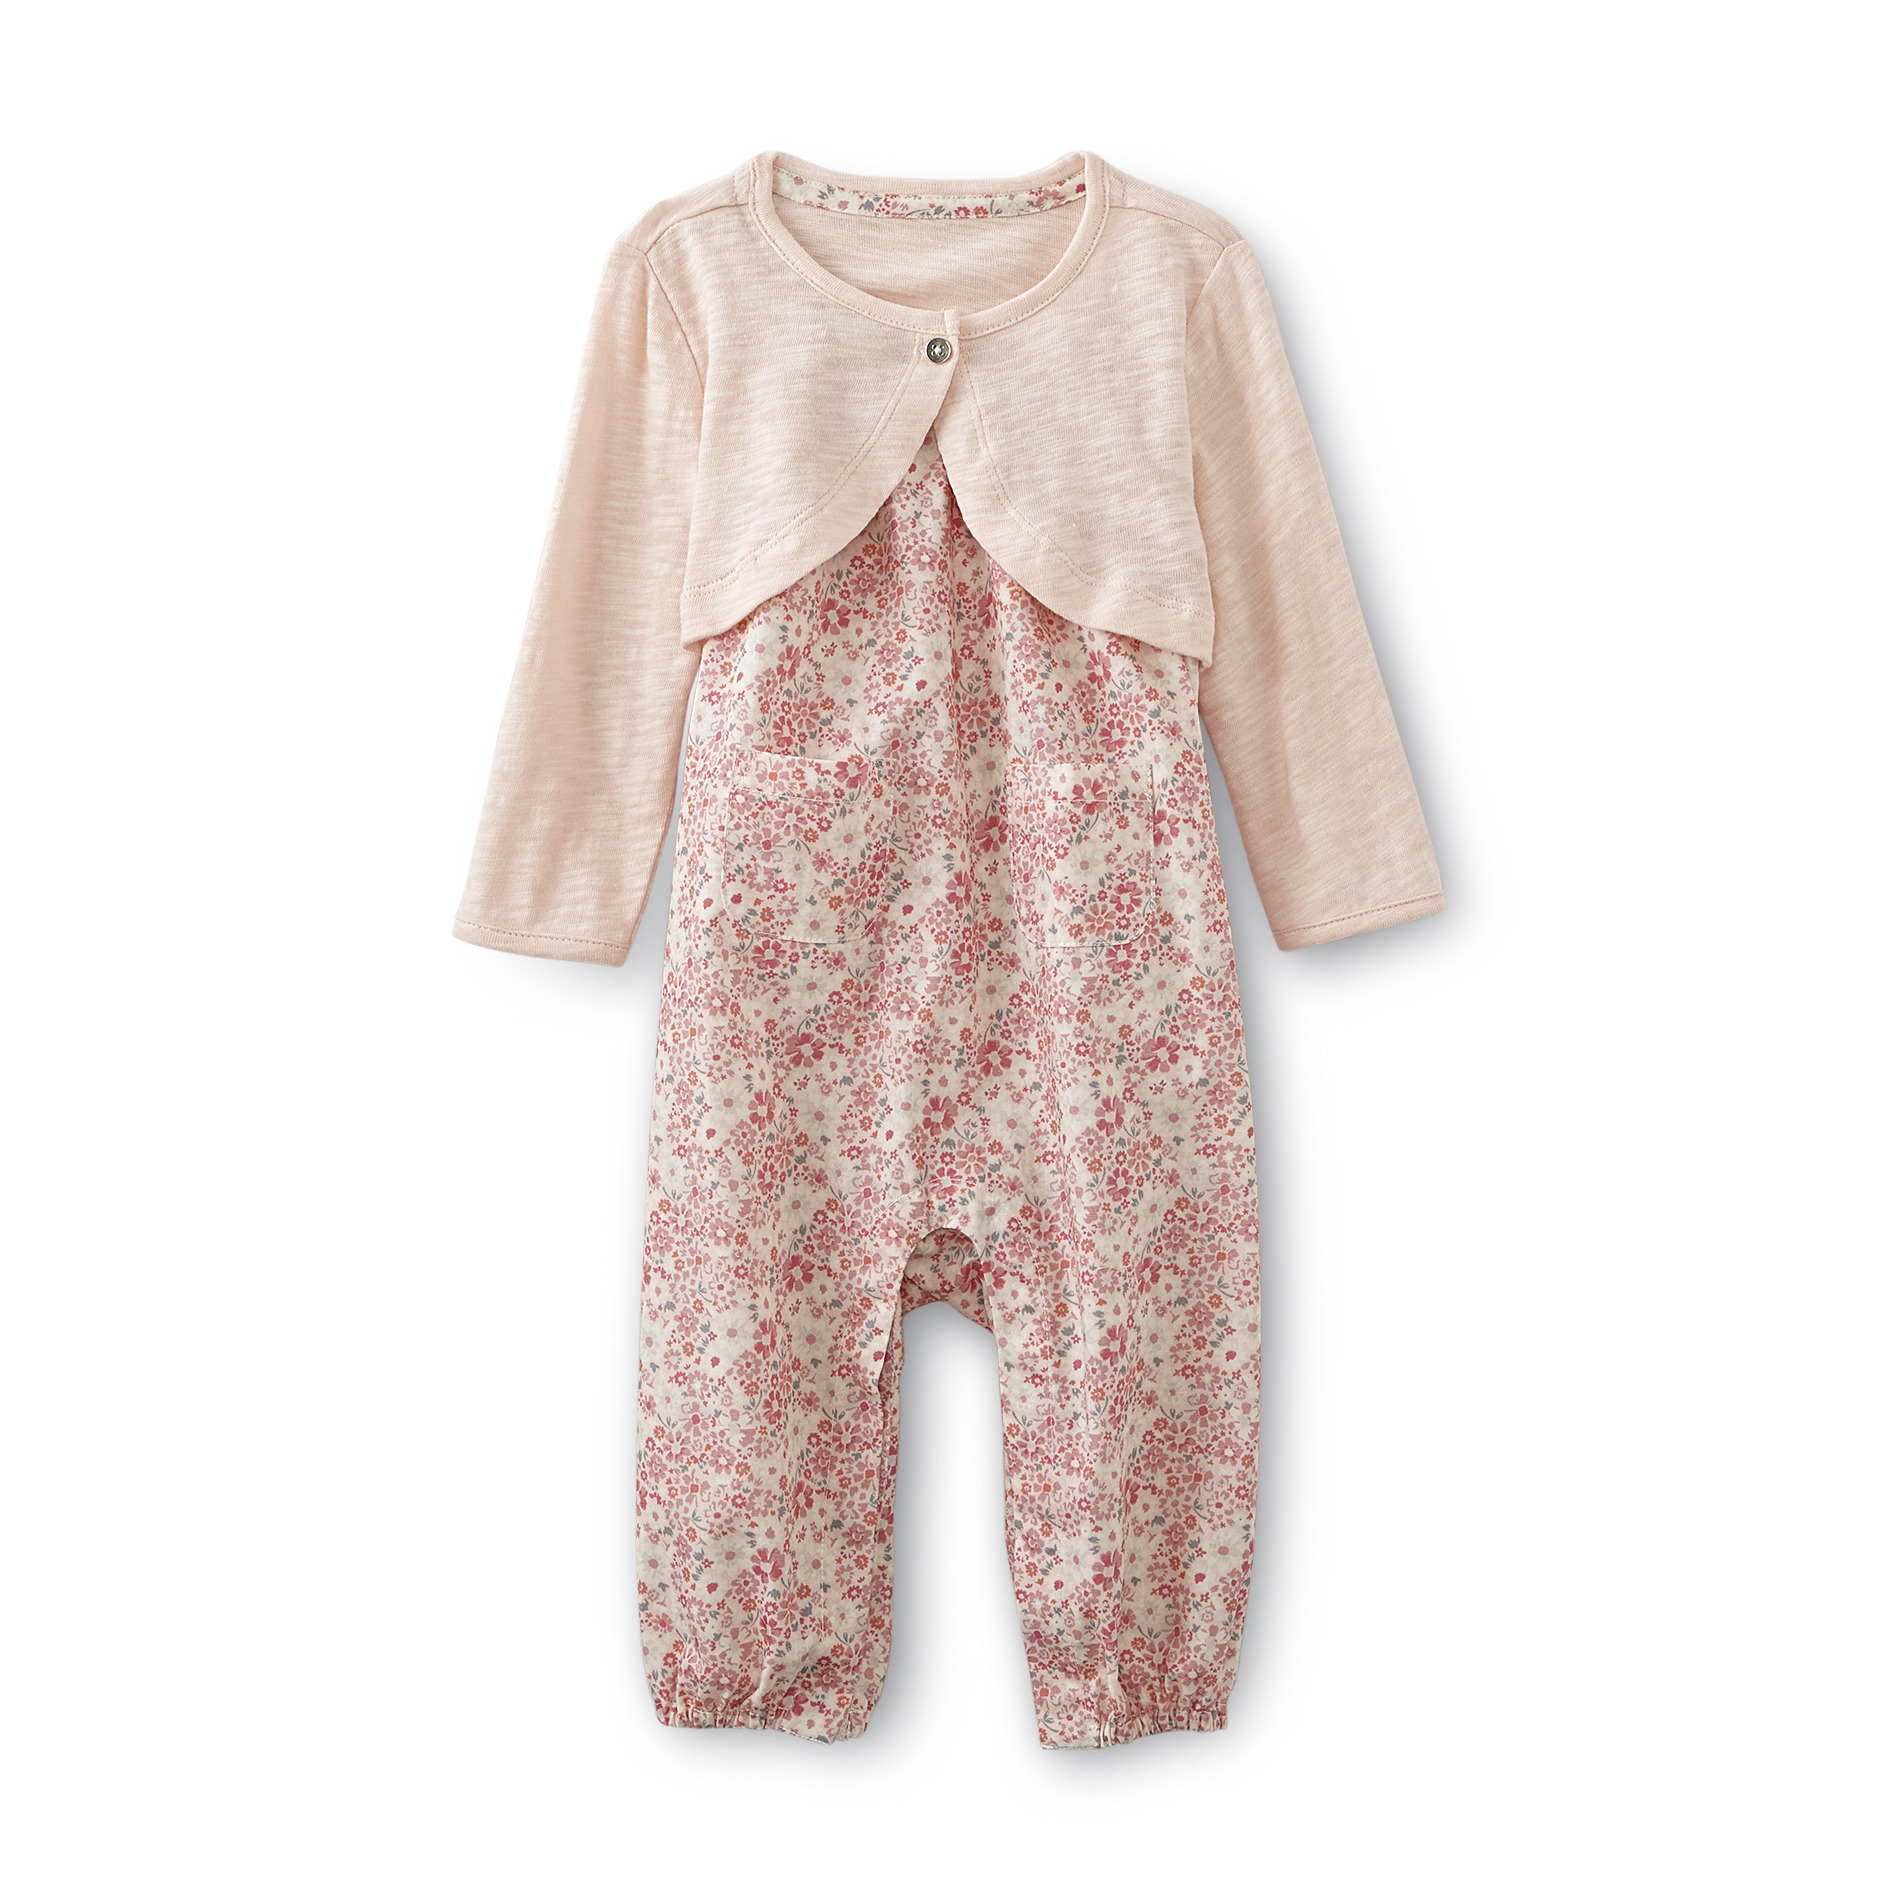 Little Wonders Newborn & Infant Girl's Romper & Sweater - Floral